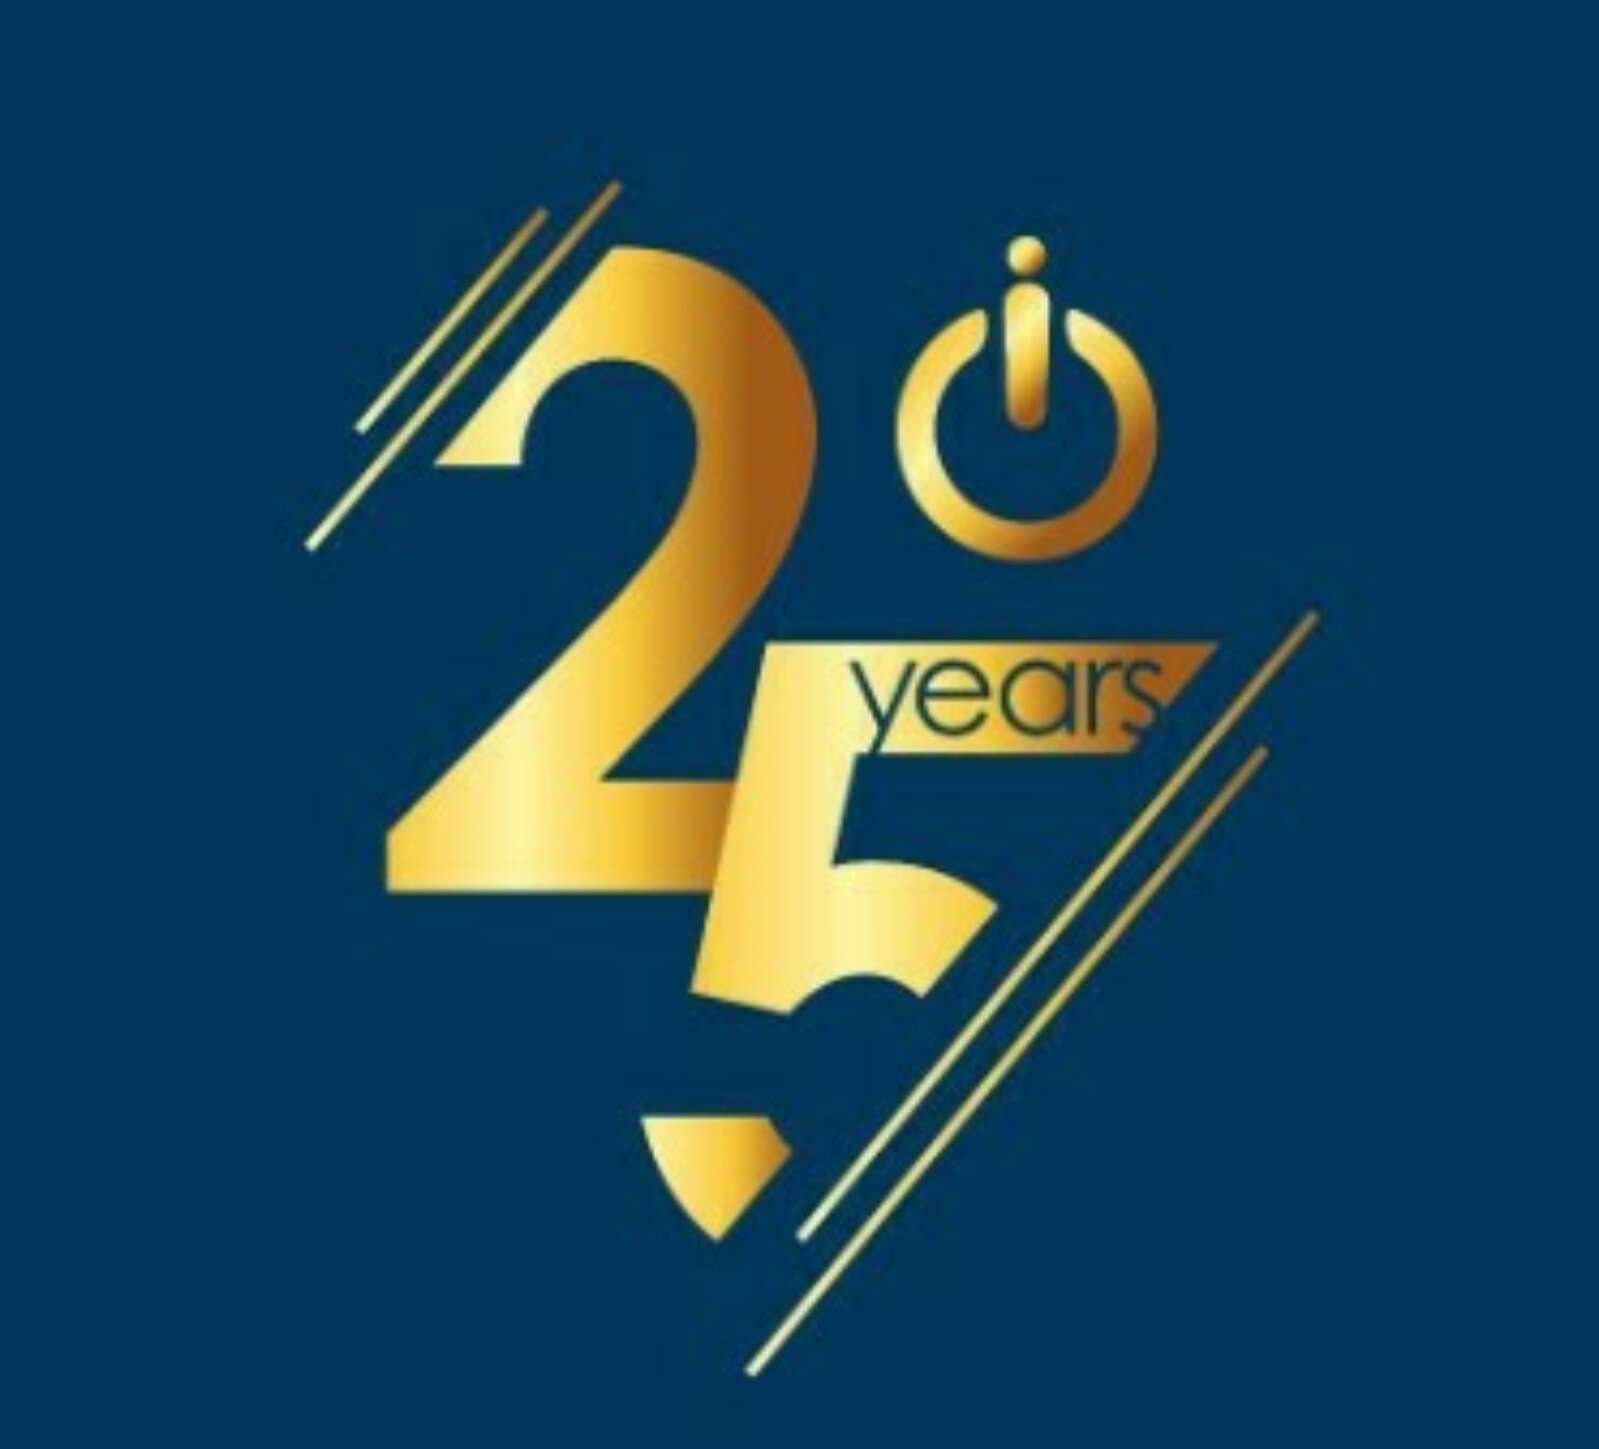 25th anniversary final logo 2